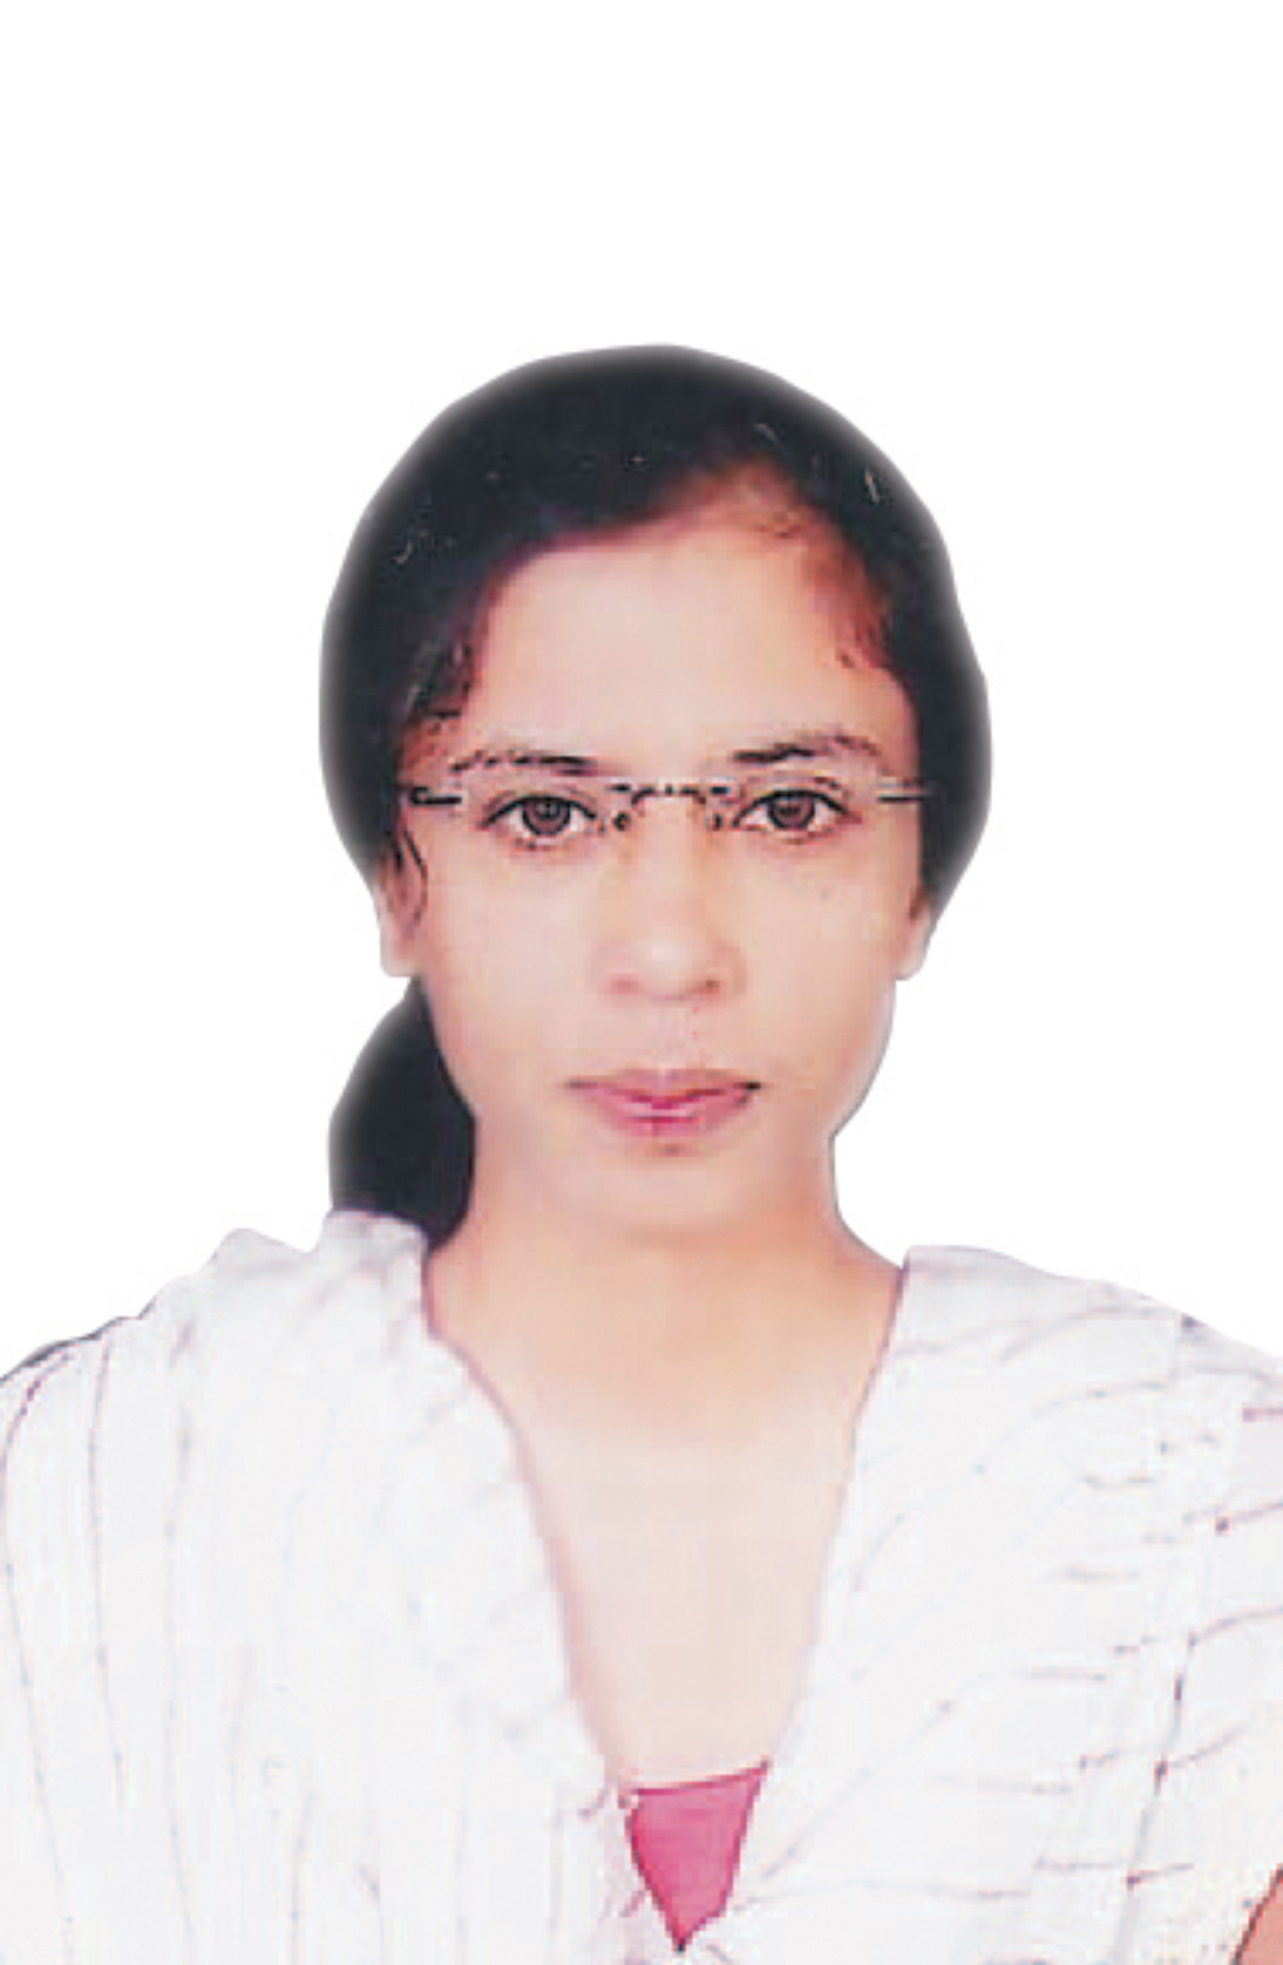 A person named Meera Kumari achieving Rank 3 in the CSIR NET Life Sciences exam 2011